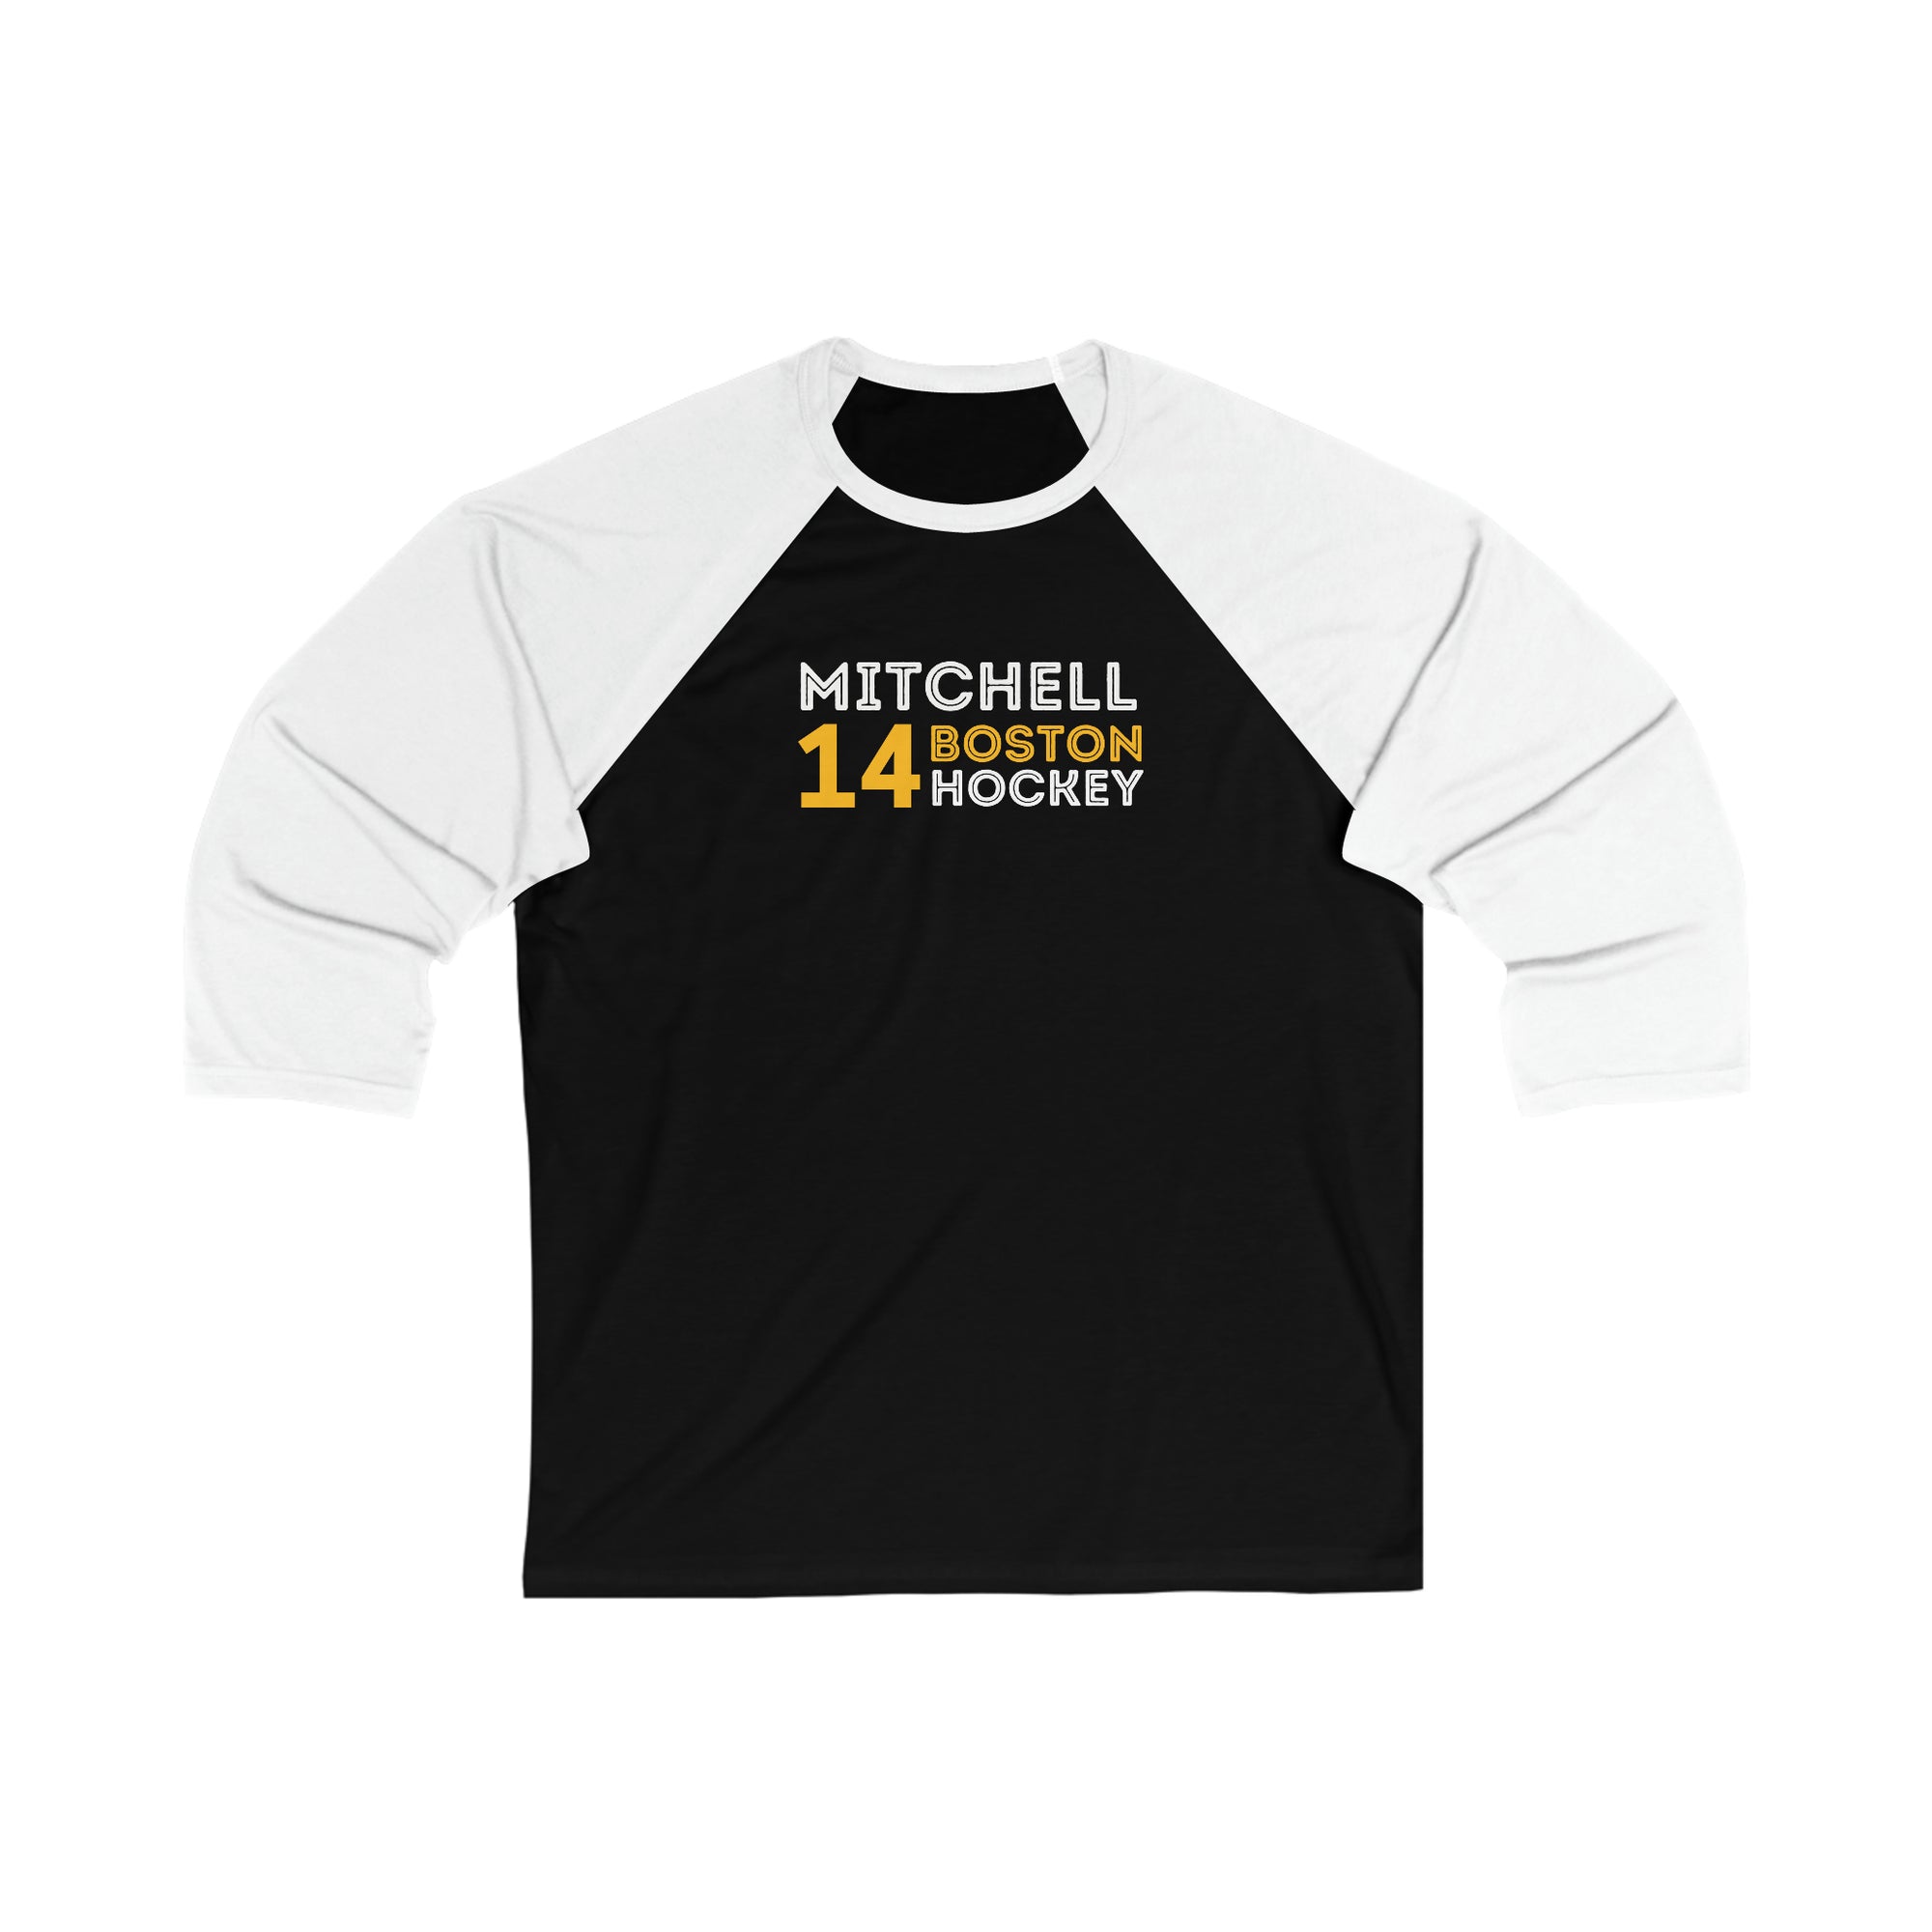 Mitchell 14 Boston Hockey Grafitti Wall Design Unisex Tri-Blend 3/4 Sleeve Raglan Baseball Shirt